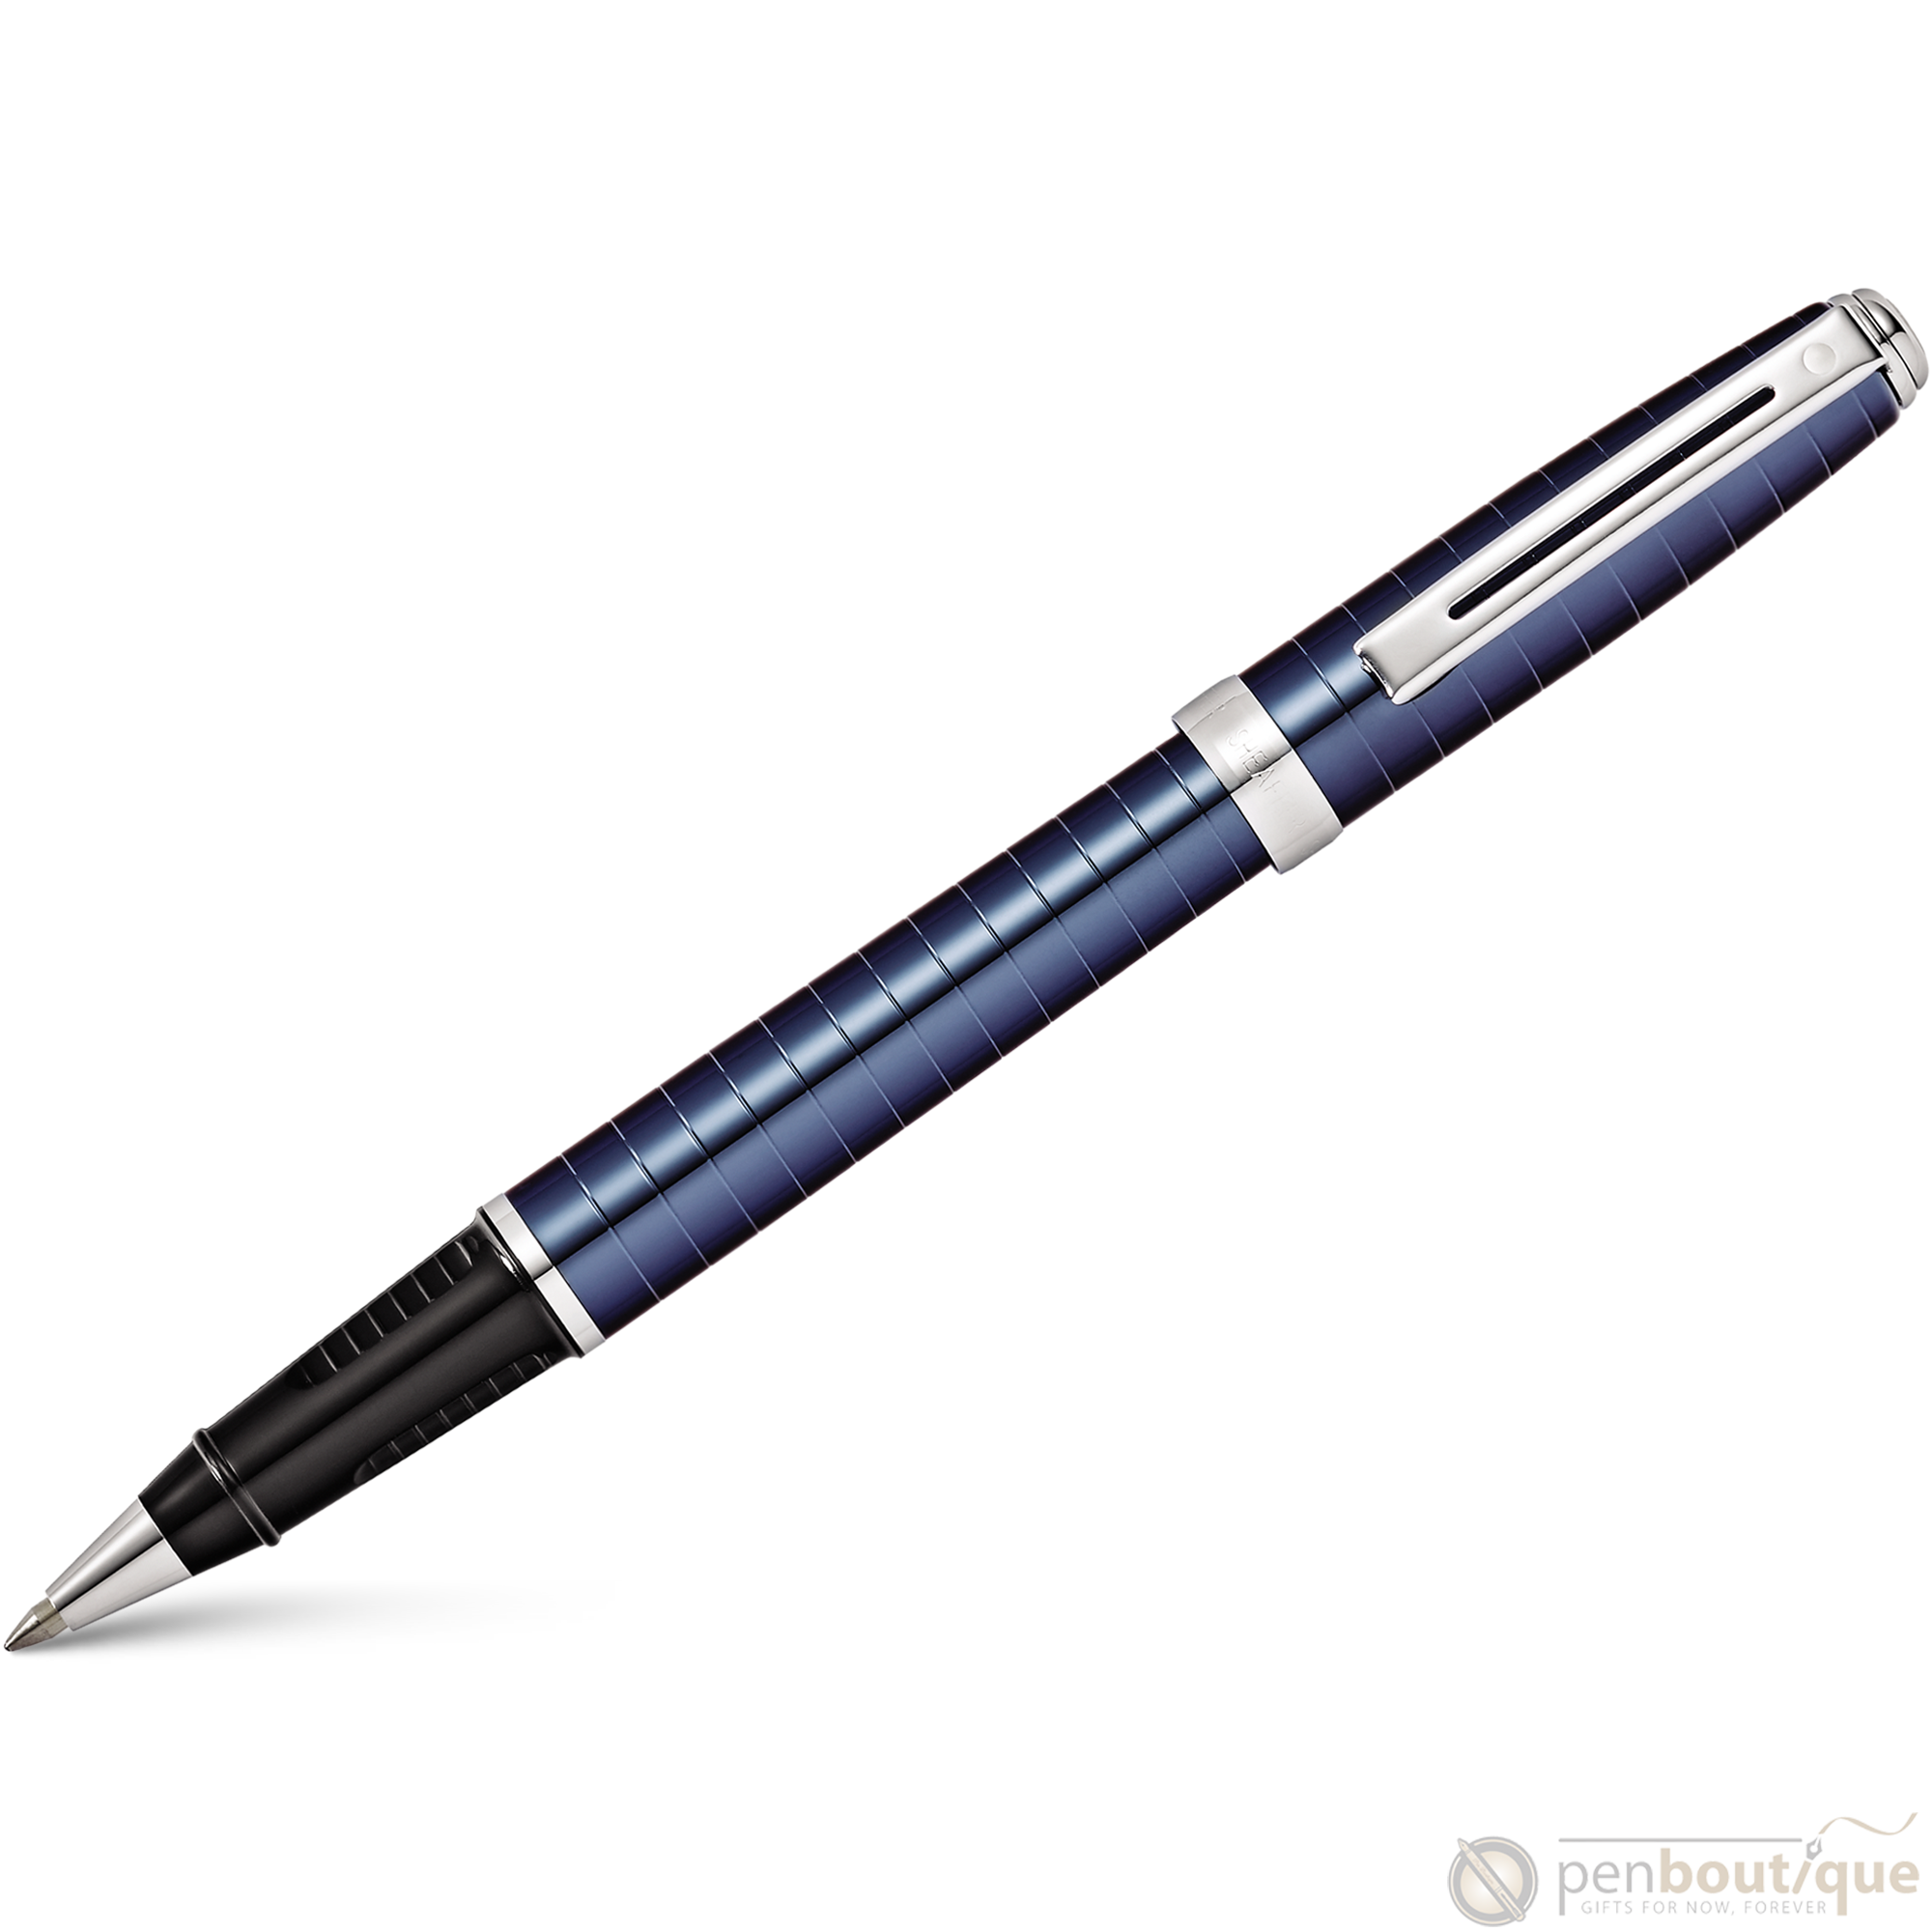 Sheaffer Prelude Rollerball Pen - Deep Blue - Chrome Trim